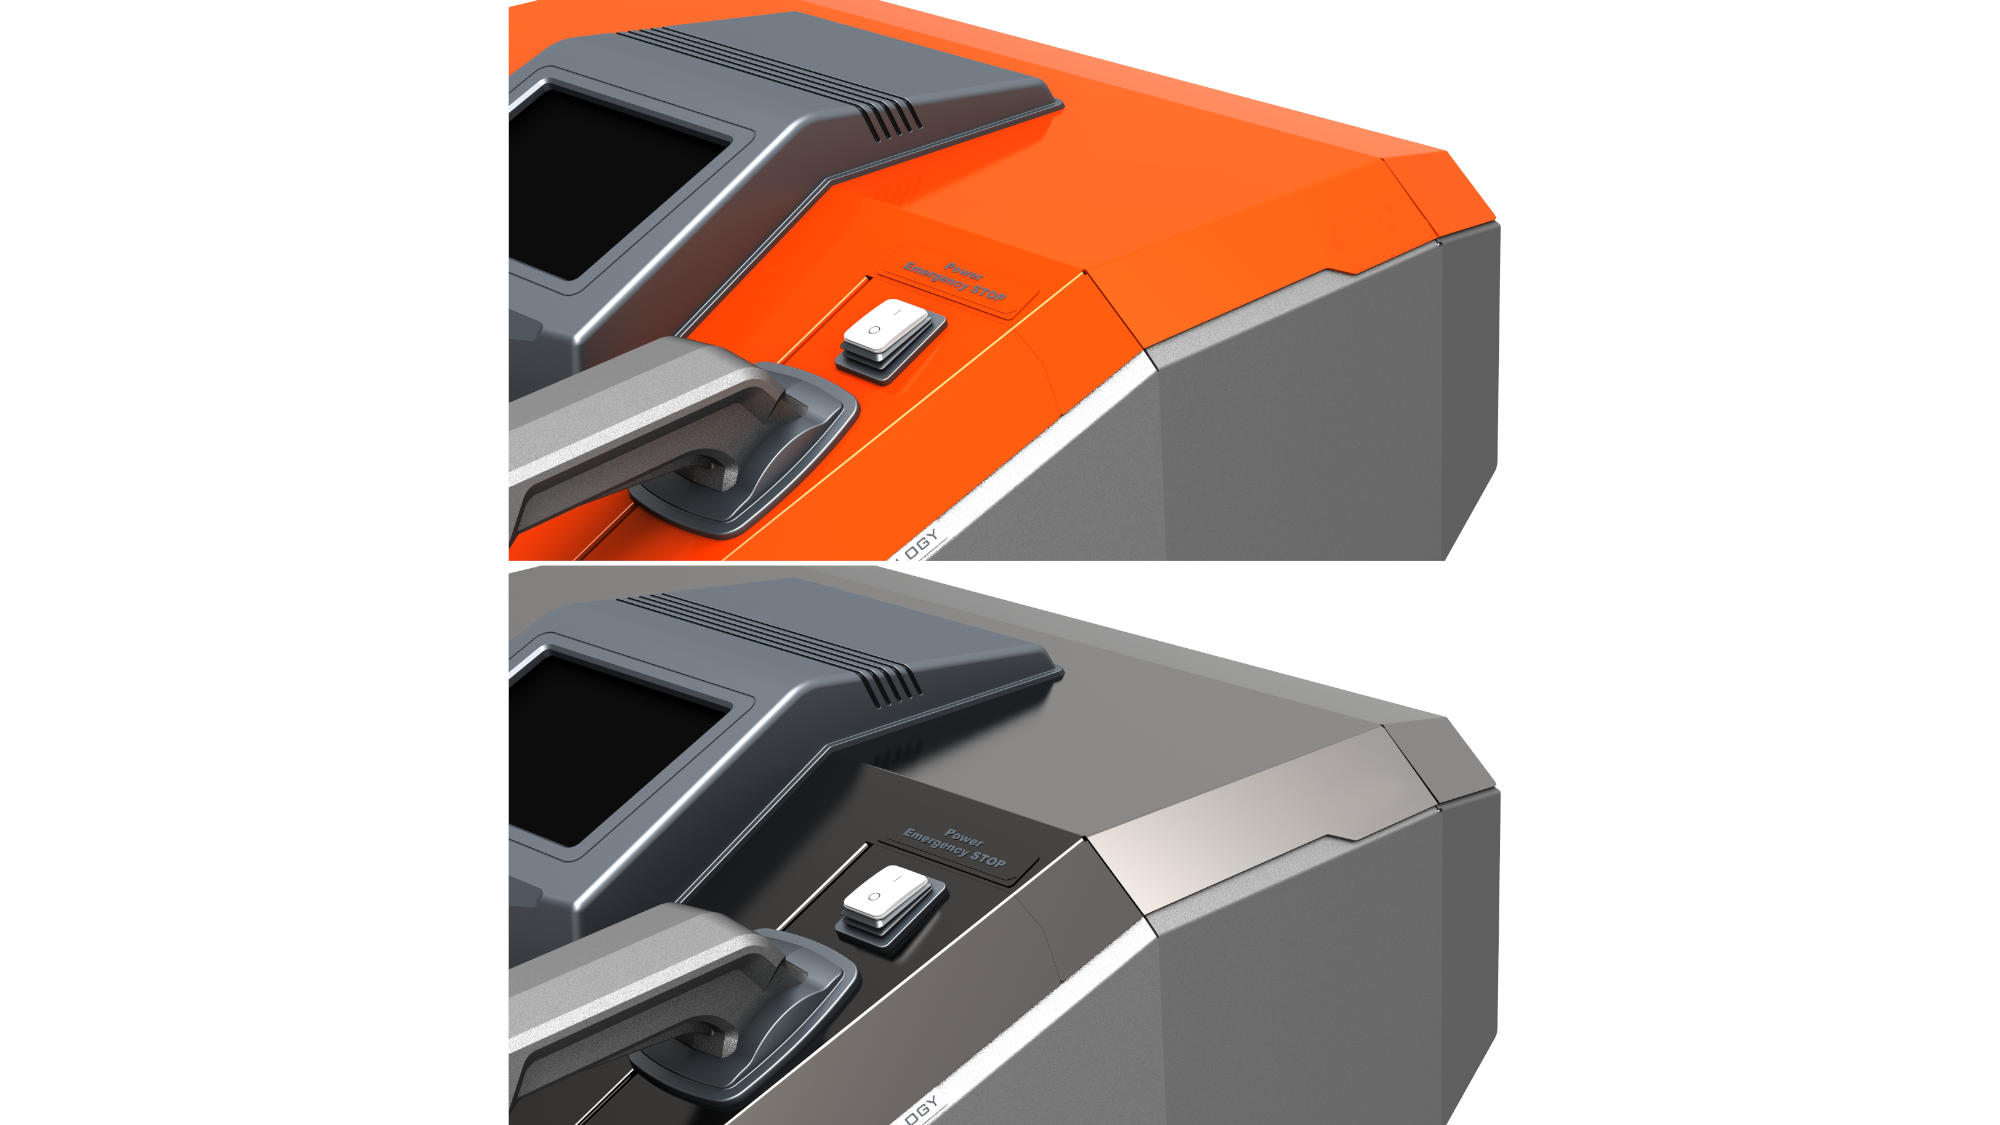 Hacona V-type orange impulse sealer and Hacona VI-type inox impulse sealer